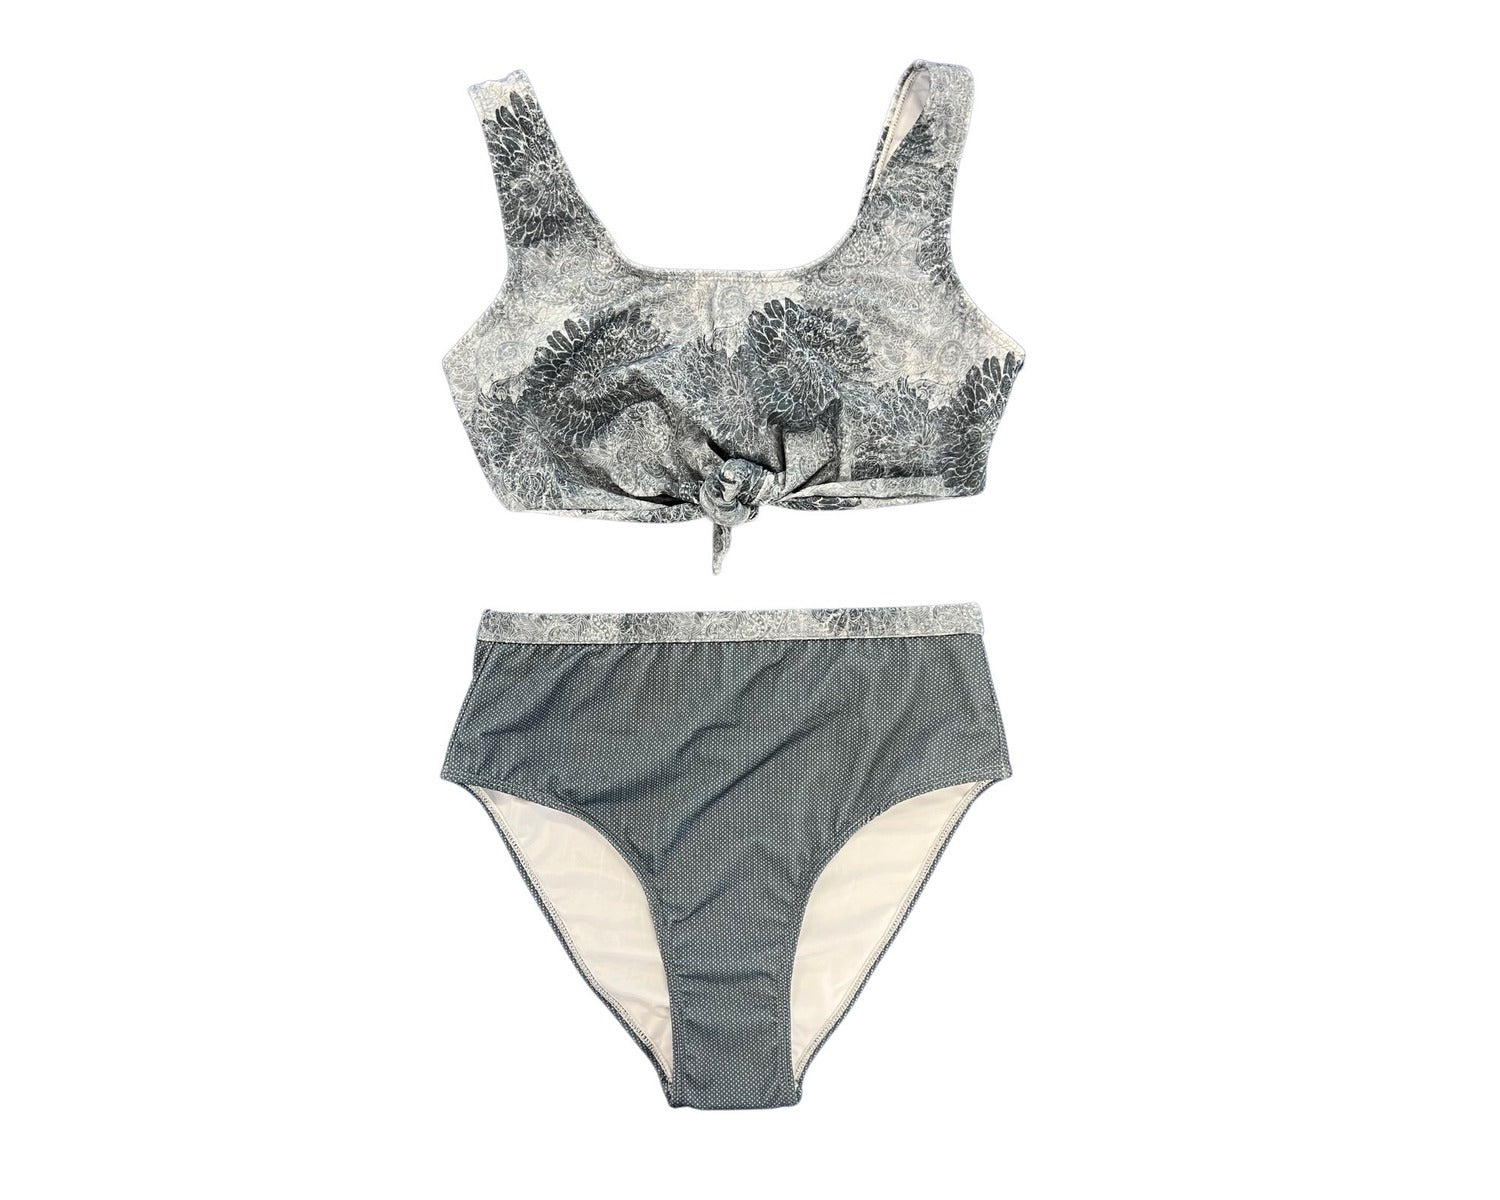 Olga Valentine Swimwear's Mandala Tie Front Teen Bikini in Grey. The top of the bikini features a grey mandala flower pattern. The bikini bottom features a similar design around the waist and is also grey.